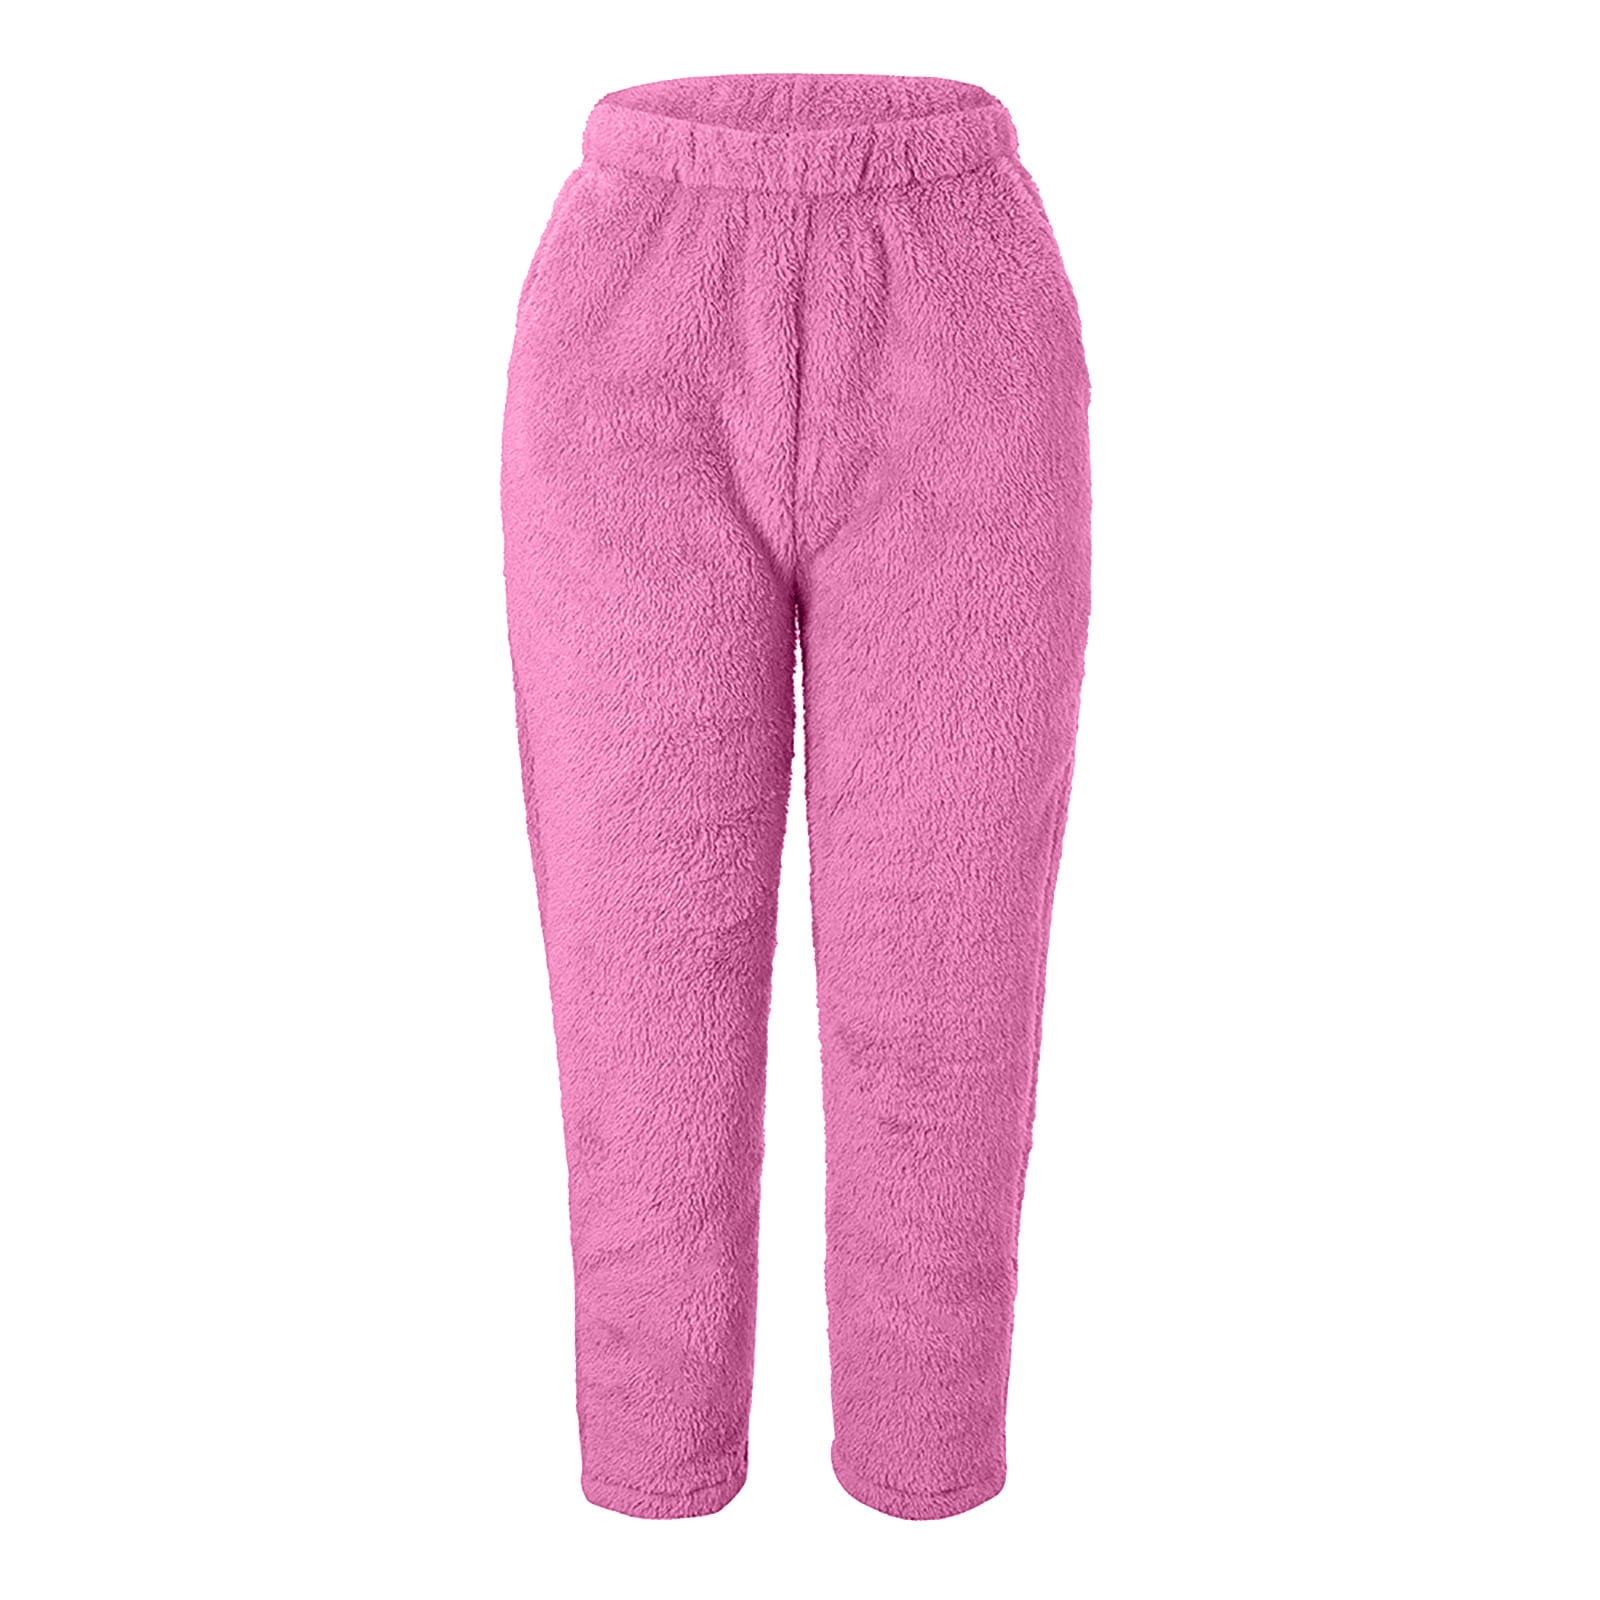  Fleece Pajama Pants Women - Fuzzy Pajama Bottoms